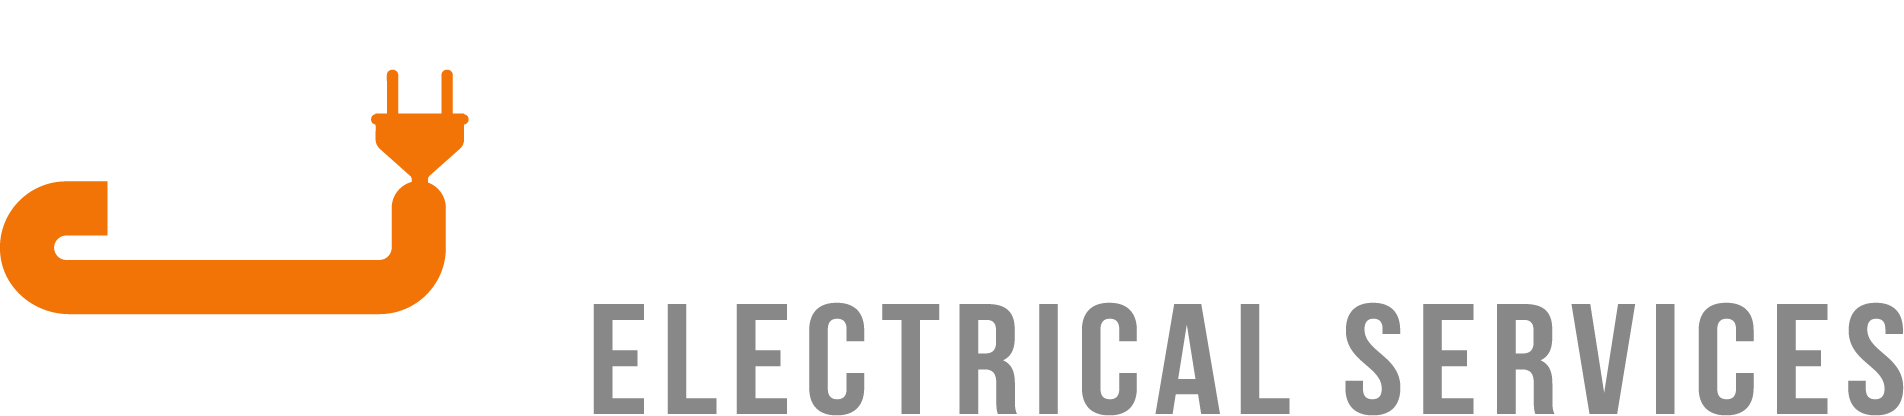 Josephs electrical services logo